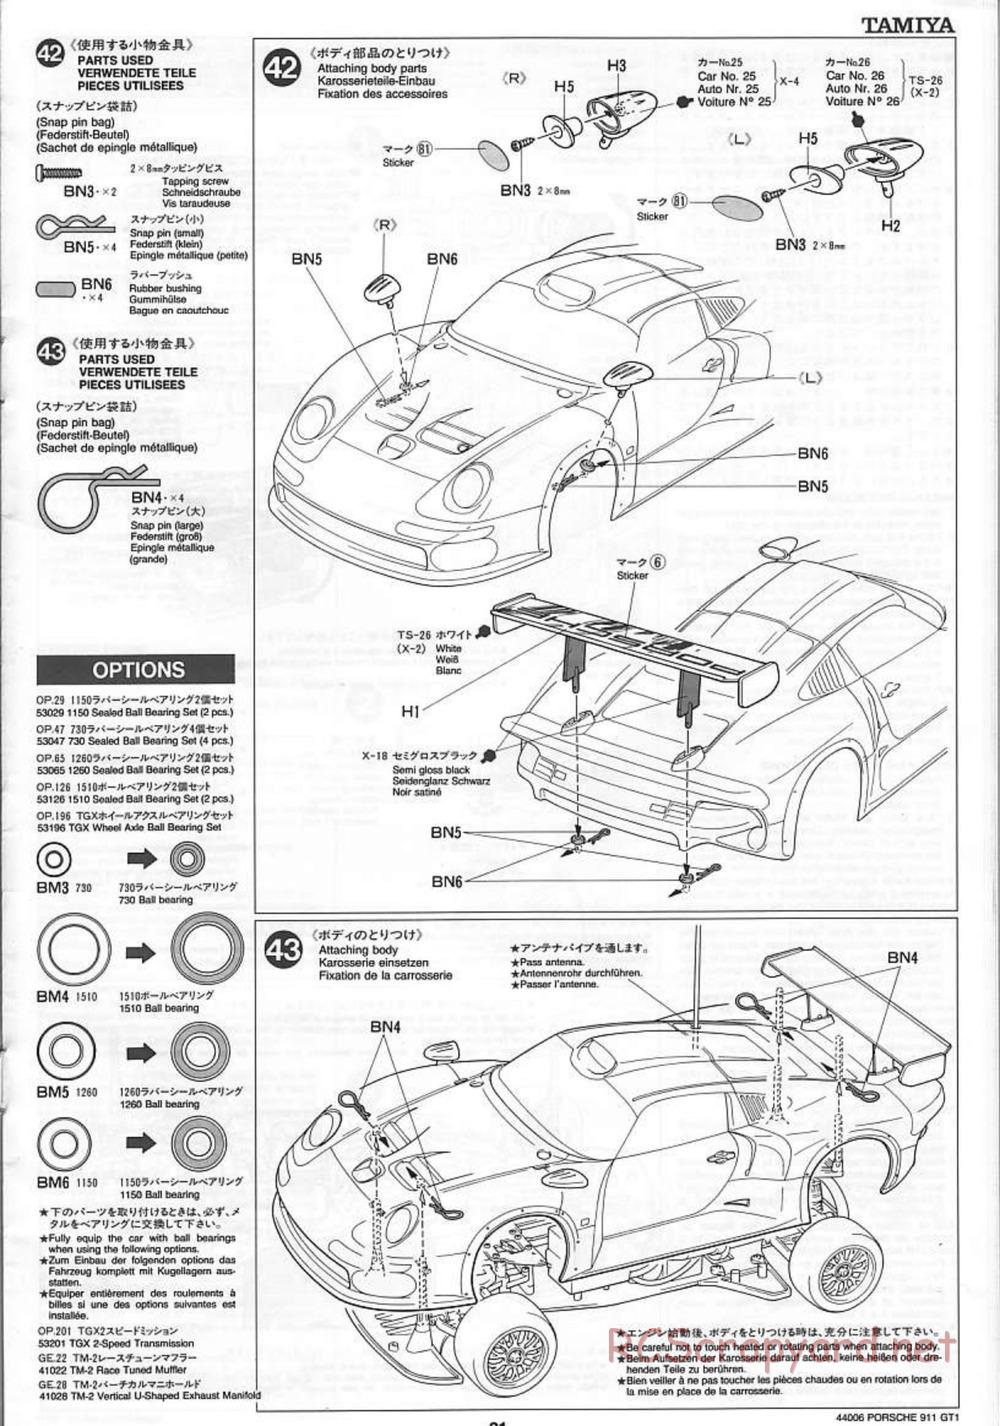 Tamiya - Porsche 911 GT1 - TGX Mk.1 Chassis - Manual - Page 21